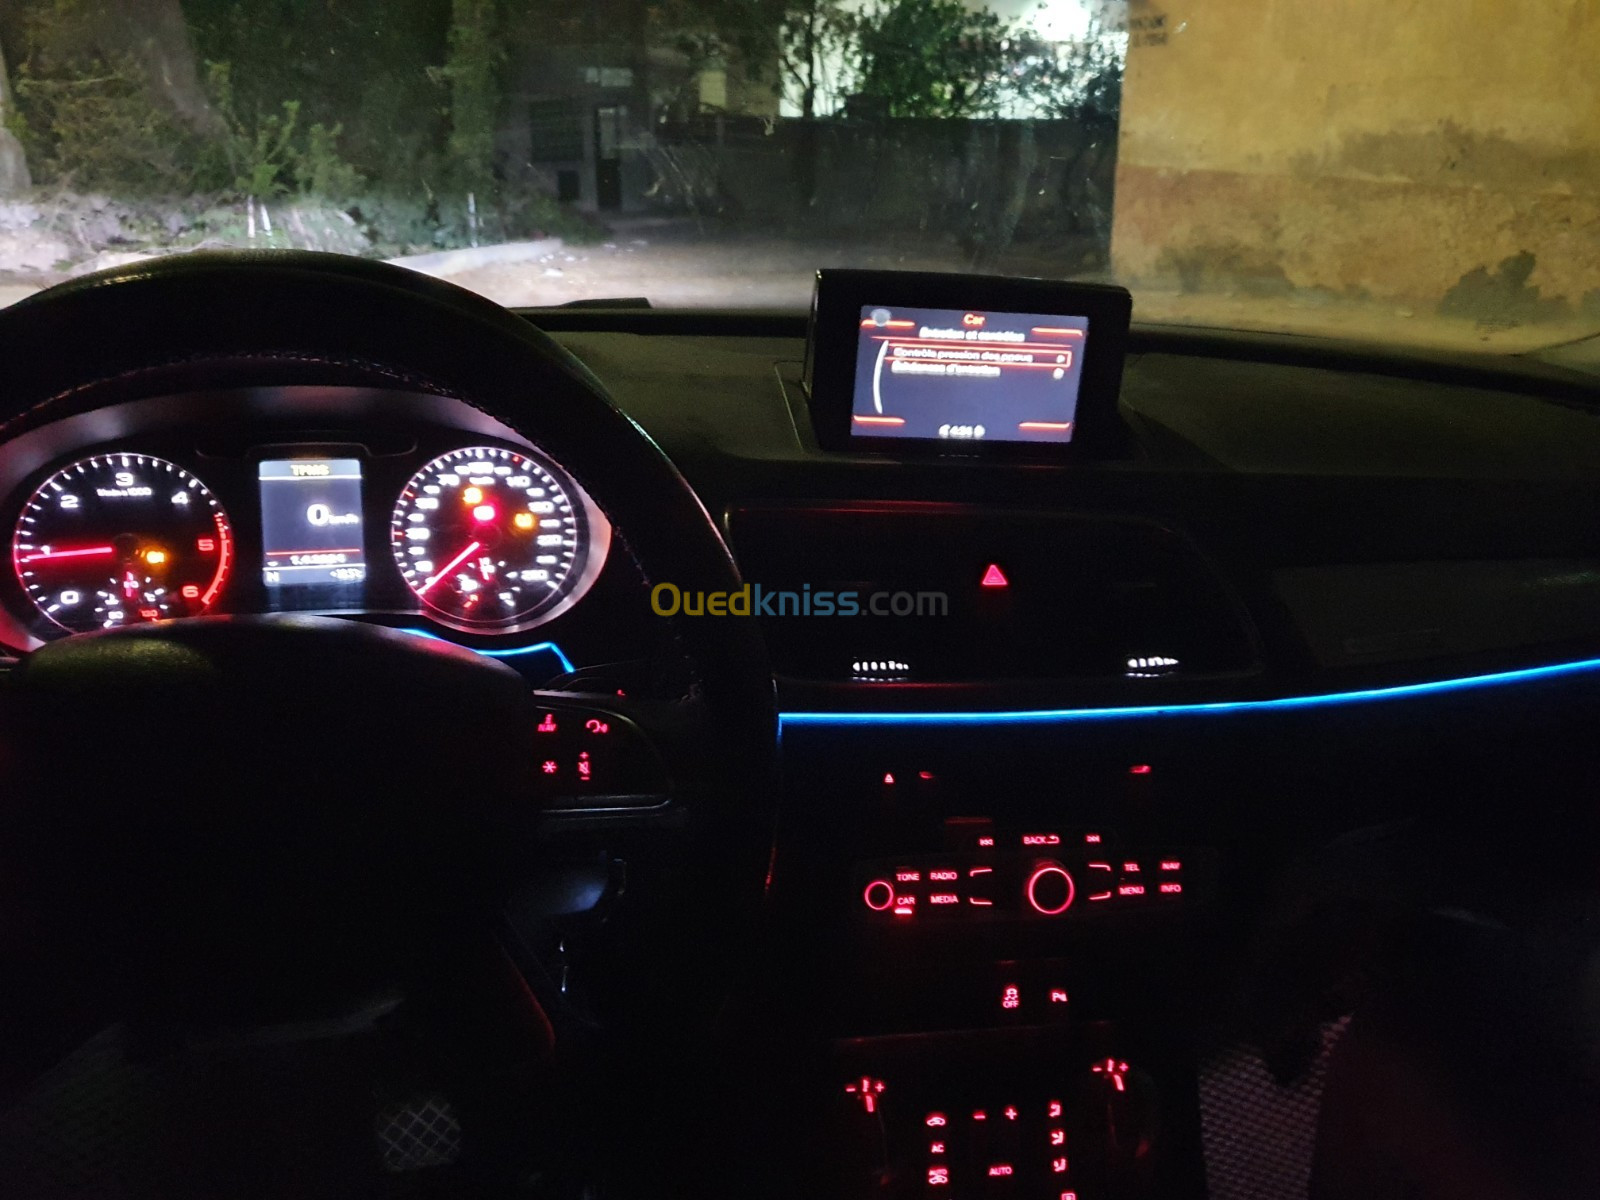 Audi Q3 2014 Off Road